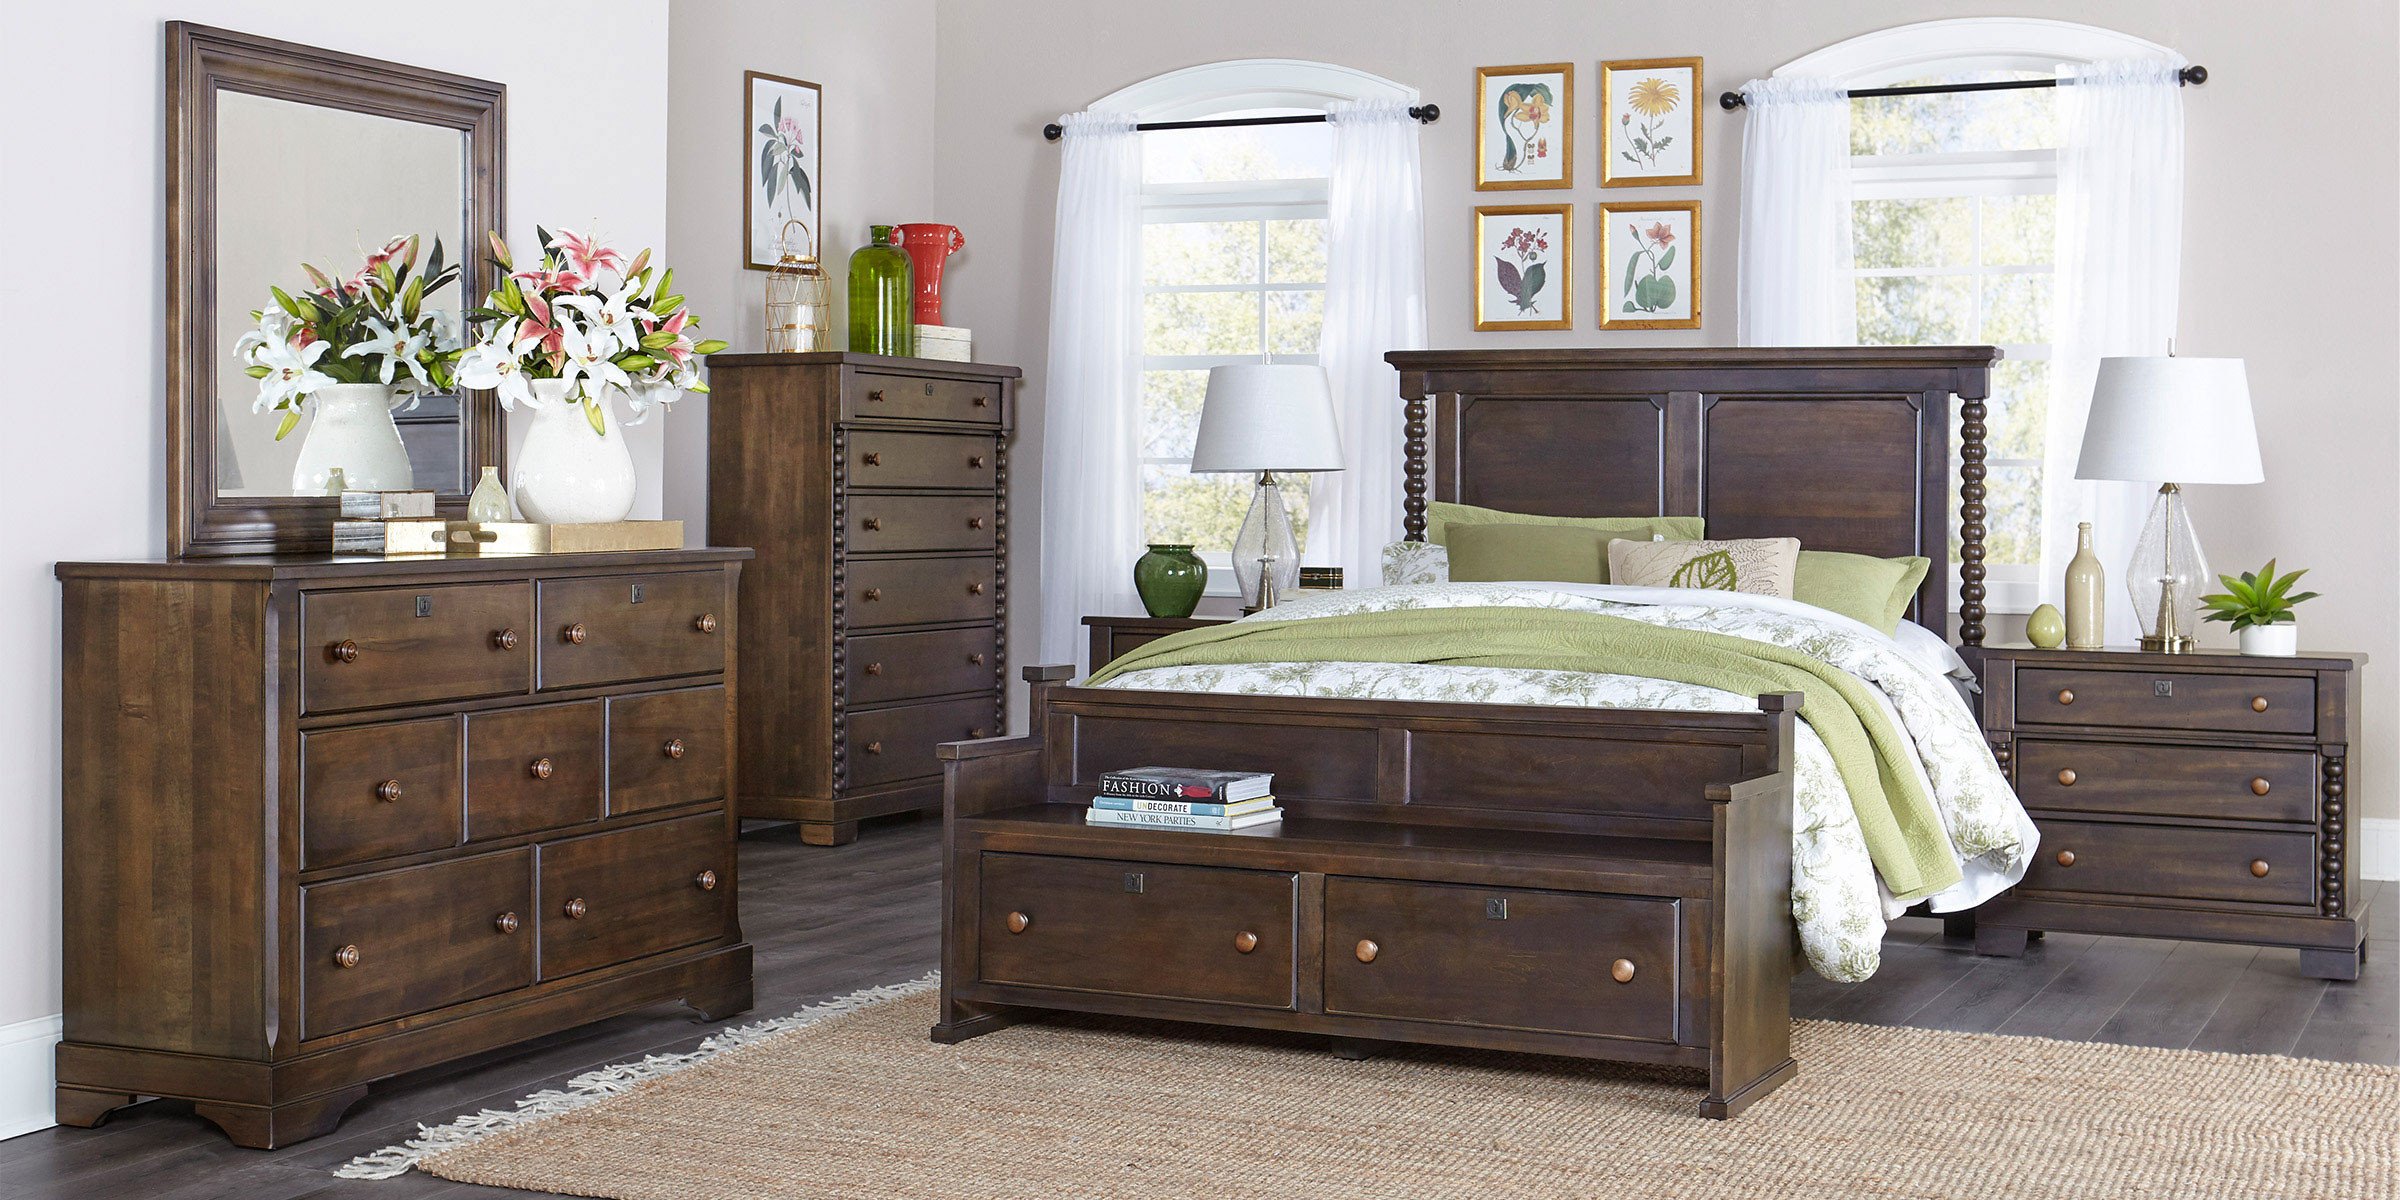 bedroom furniture at costco